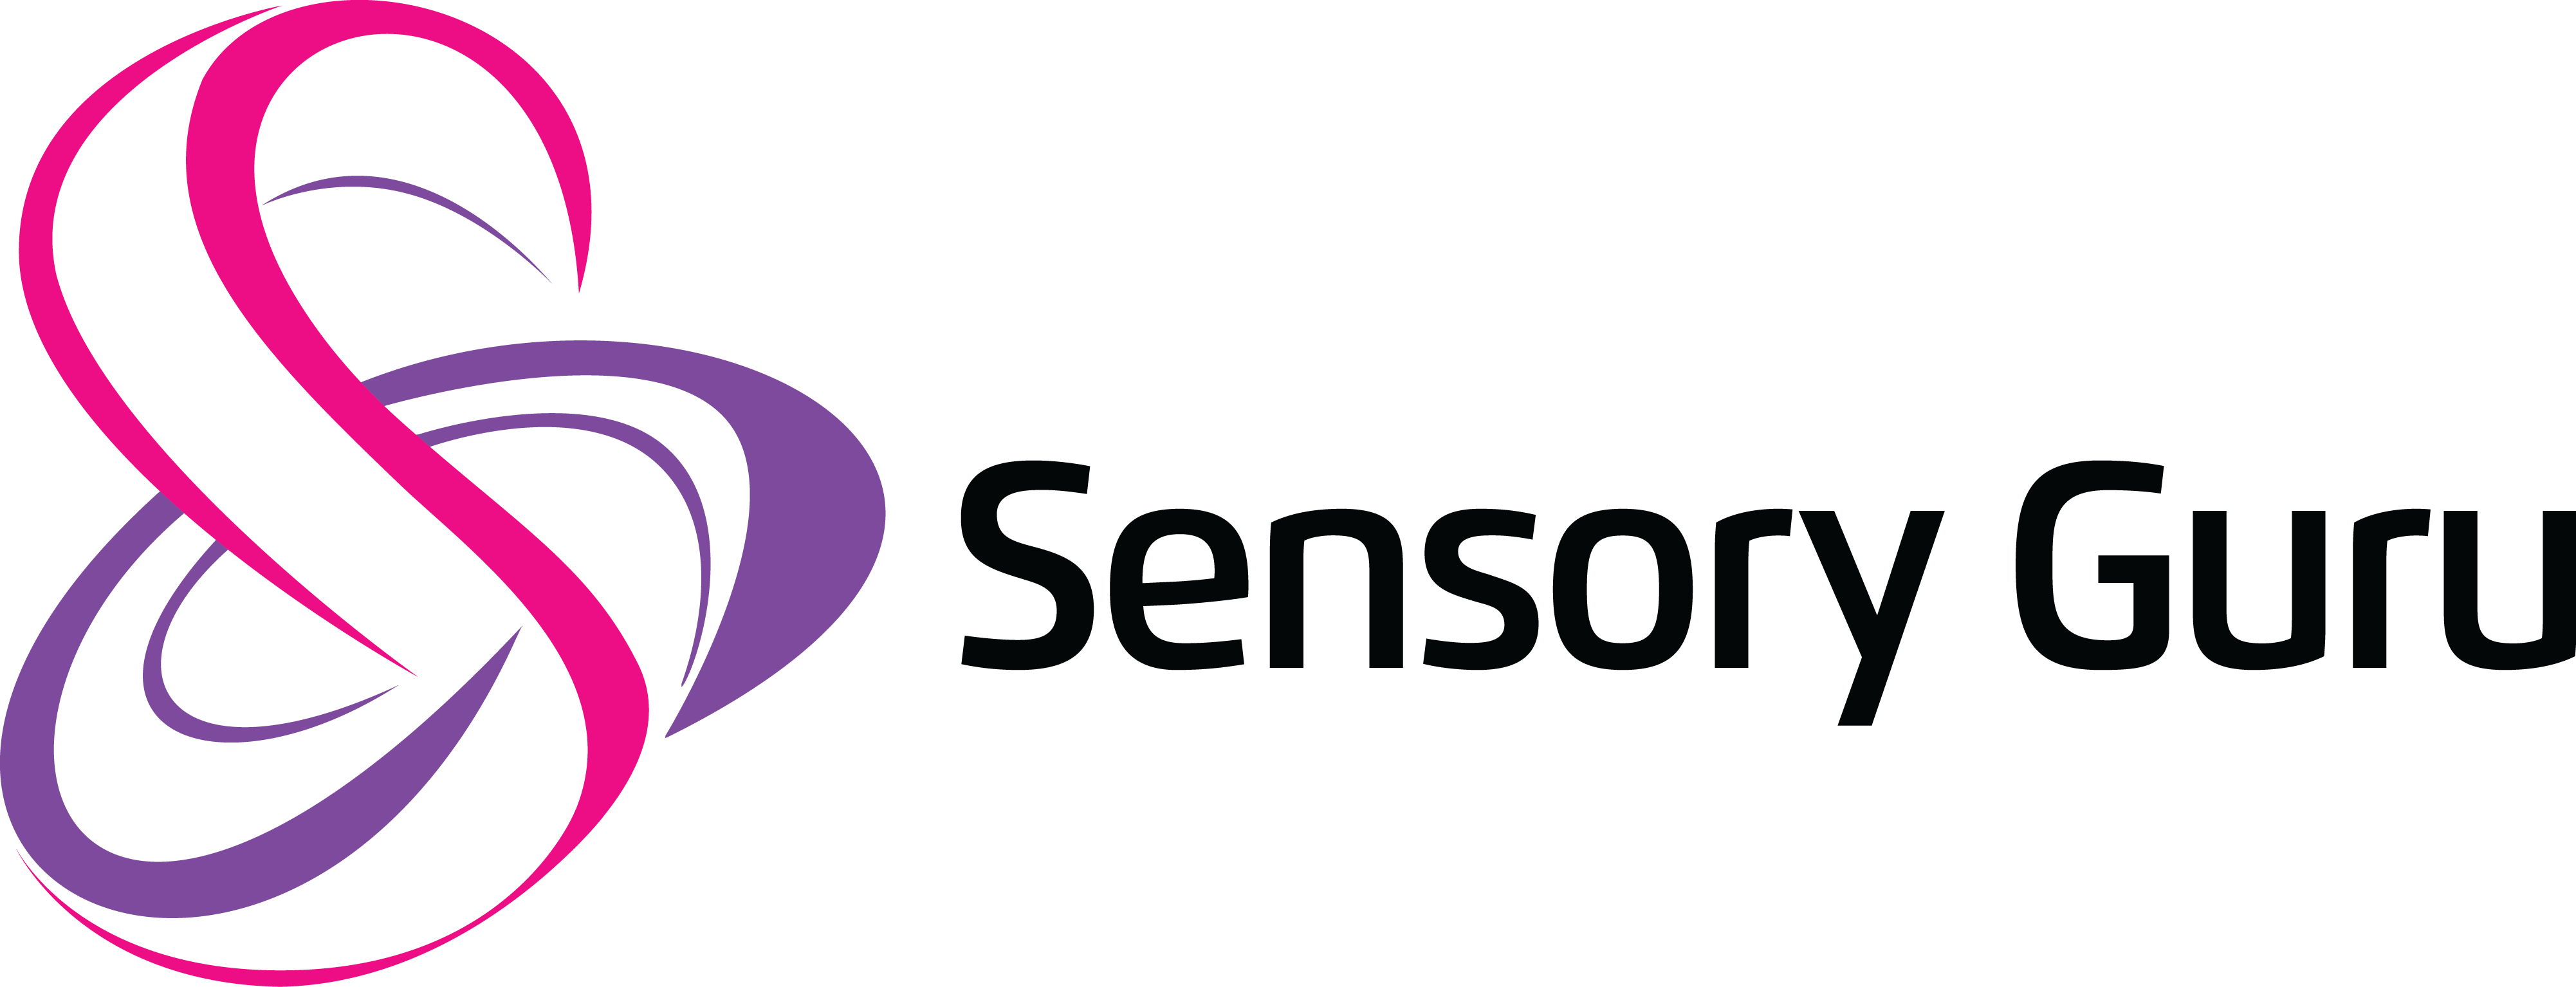 Sensory Room Equipment Australia - Link Assistive Pty Ltd